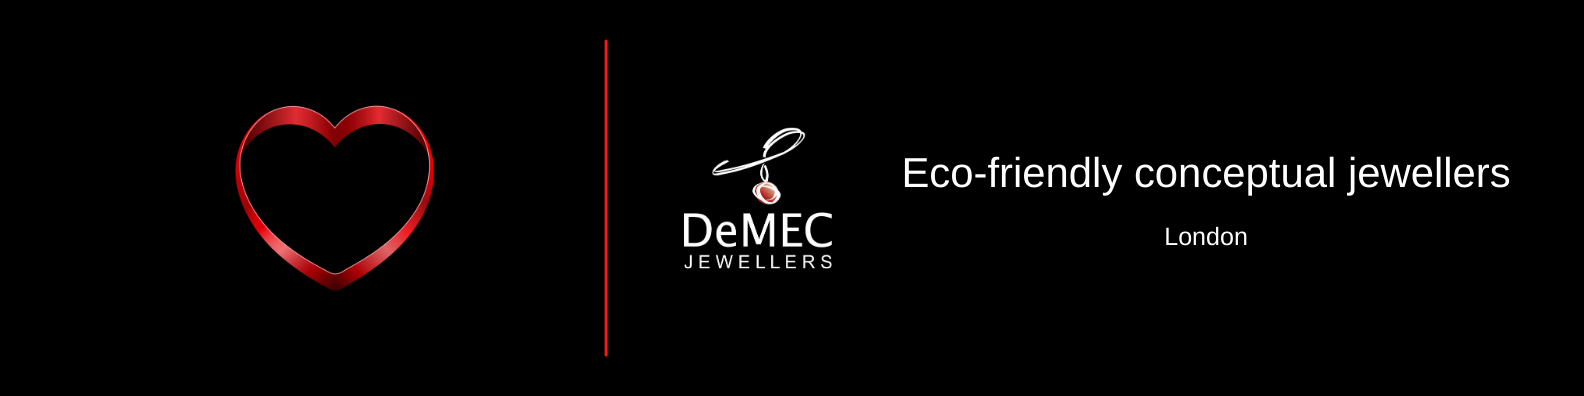 DeMEC Jewellers banner image